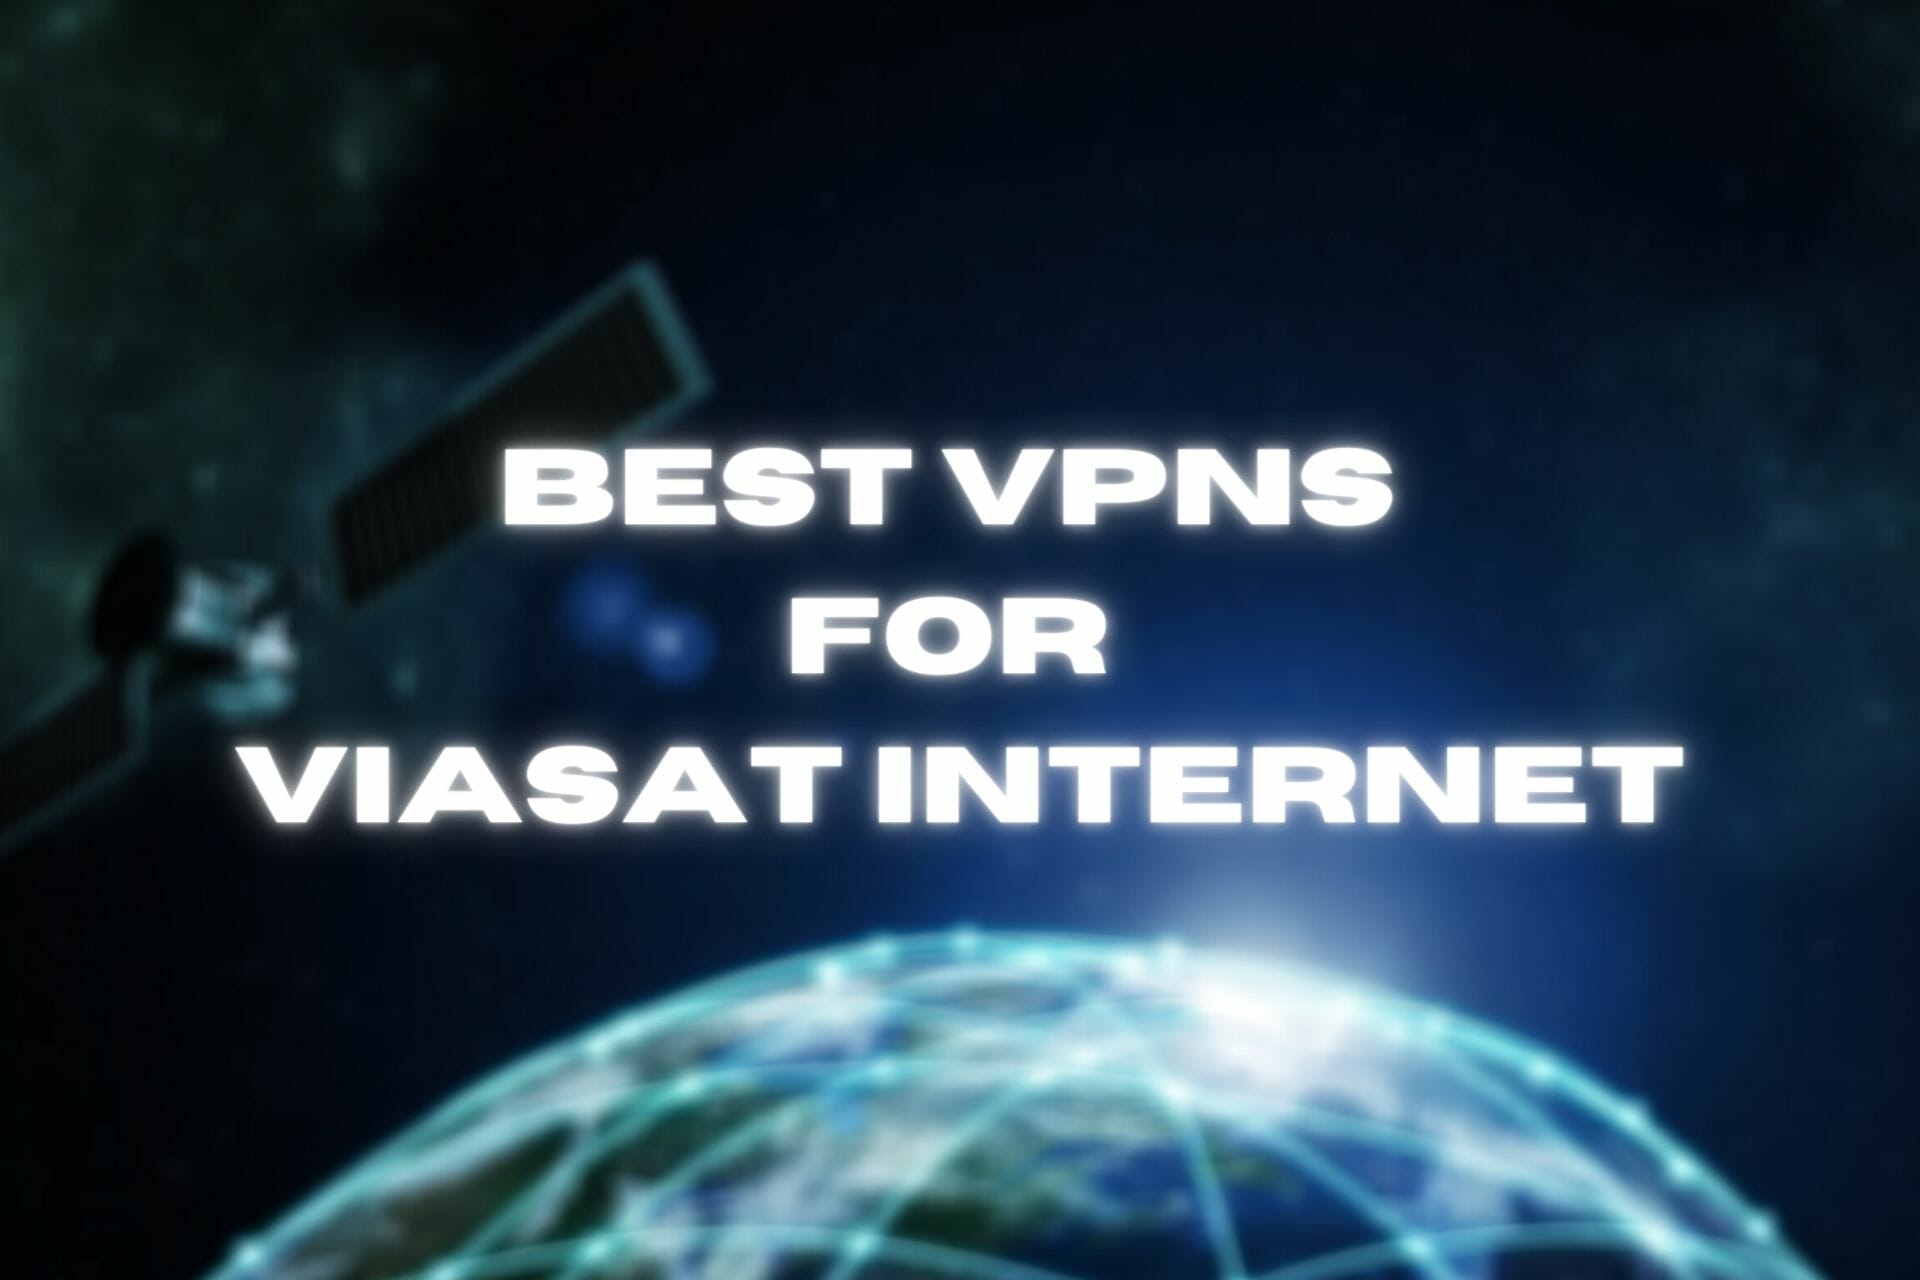 Best VPNs for Viasat Internet